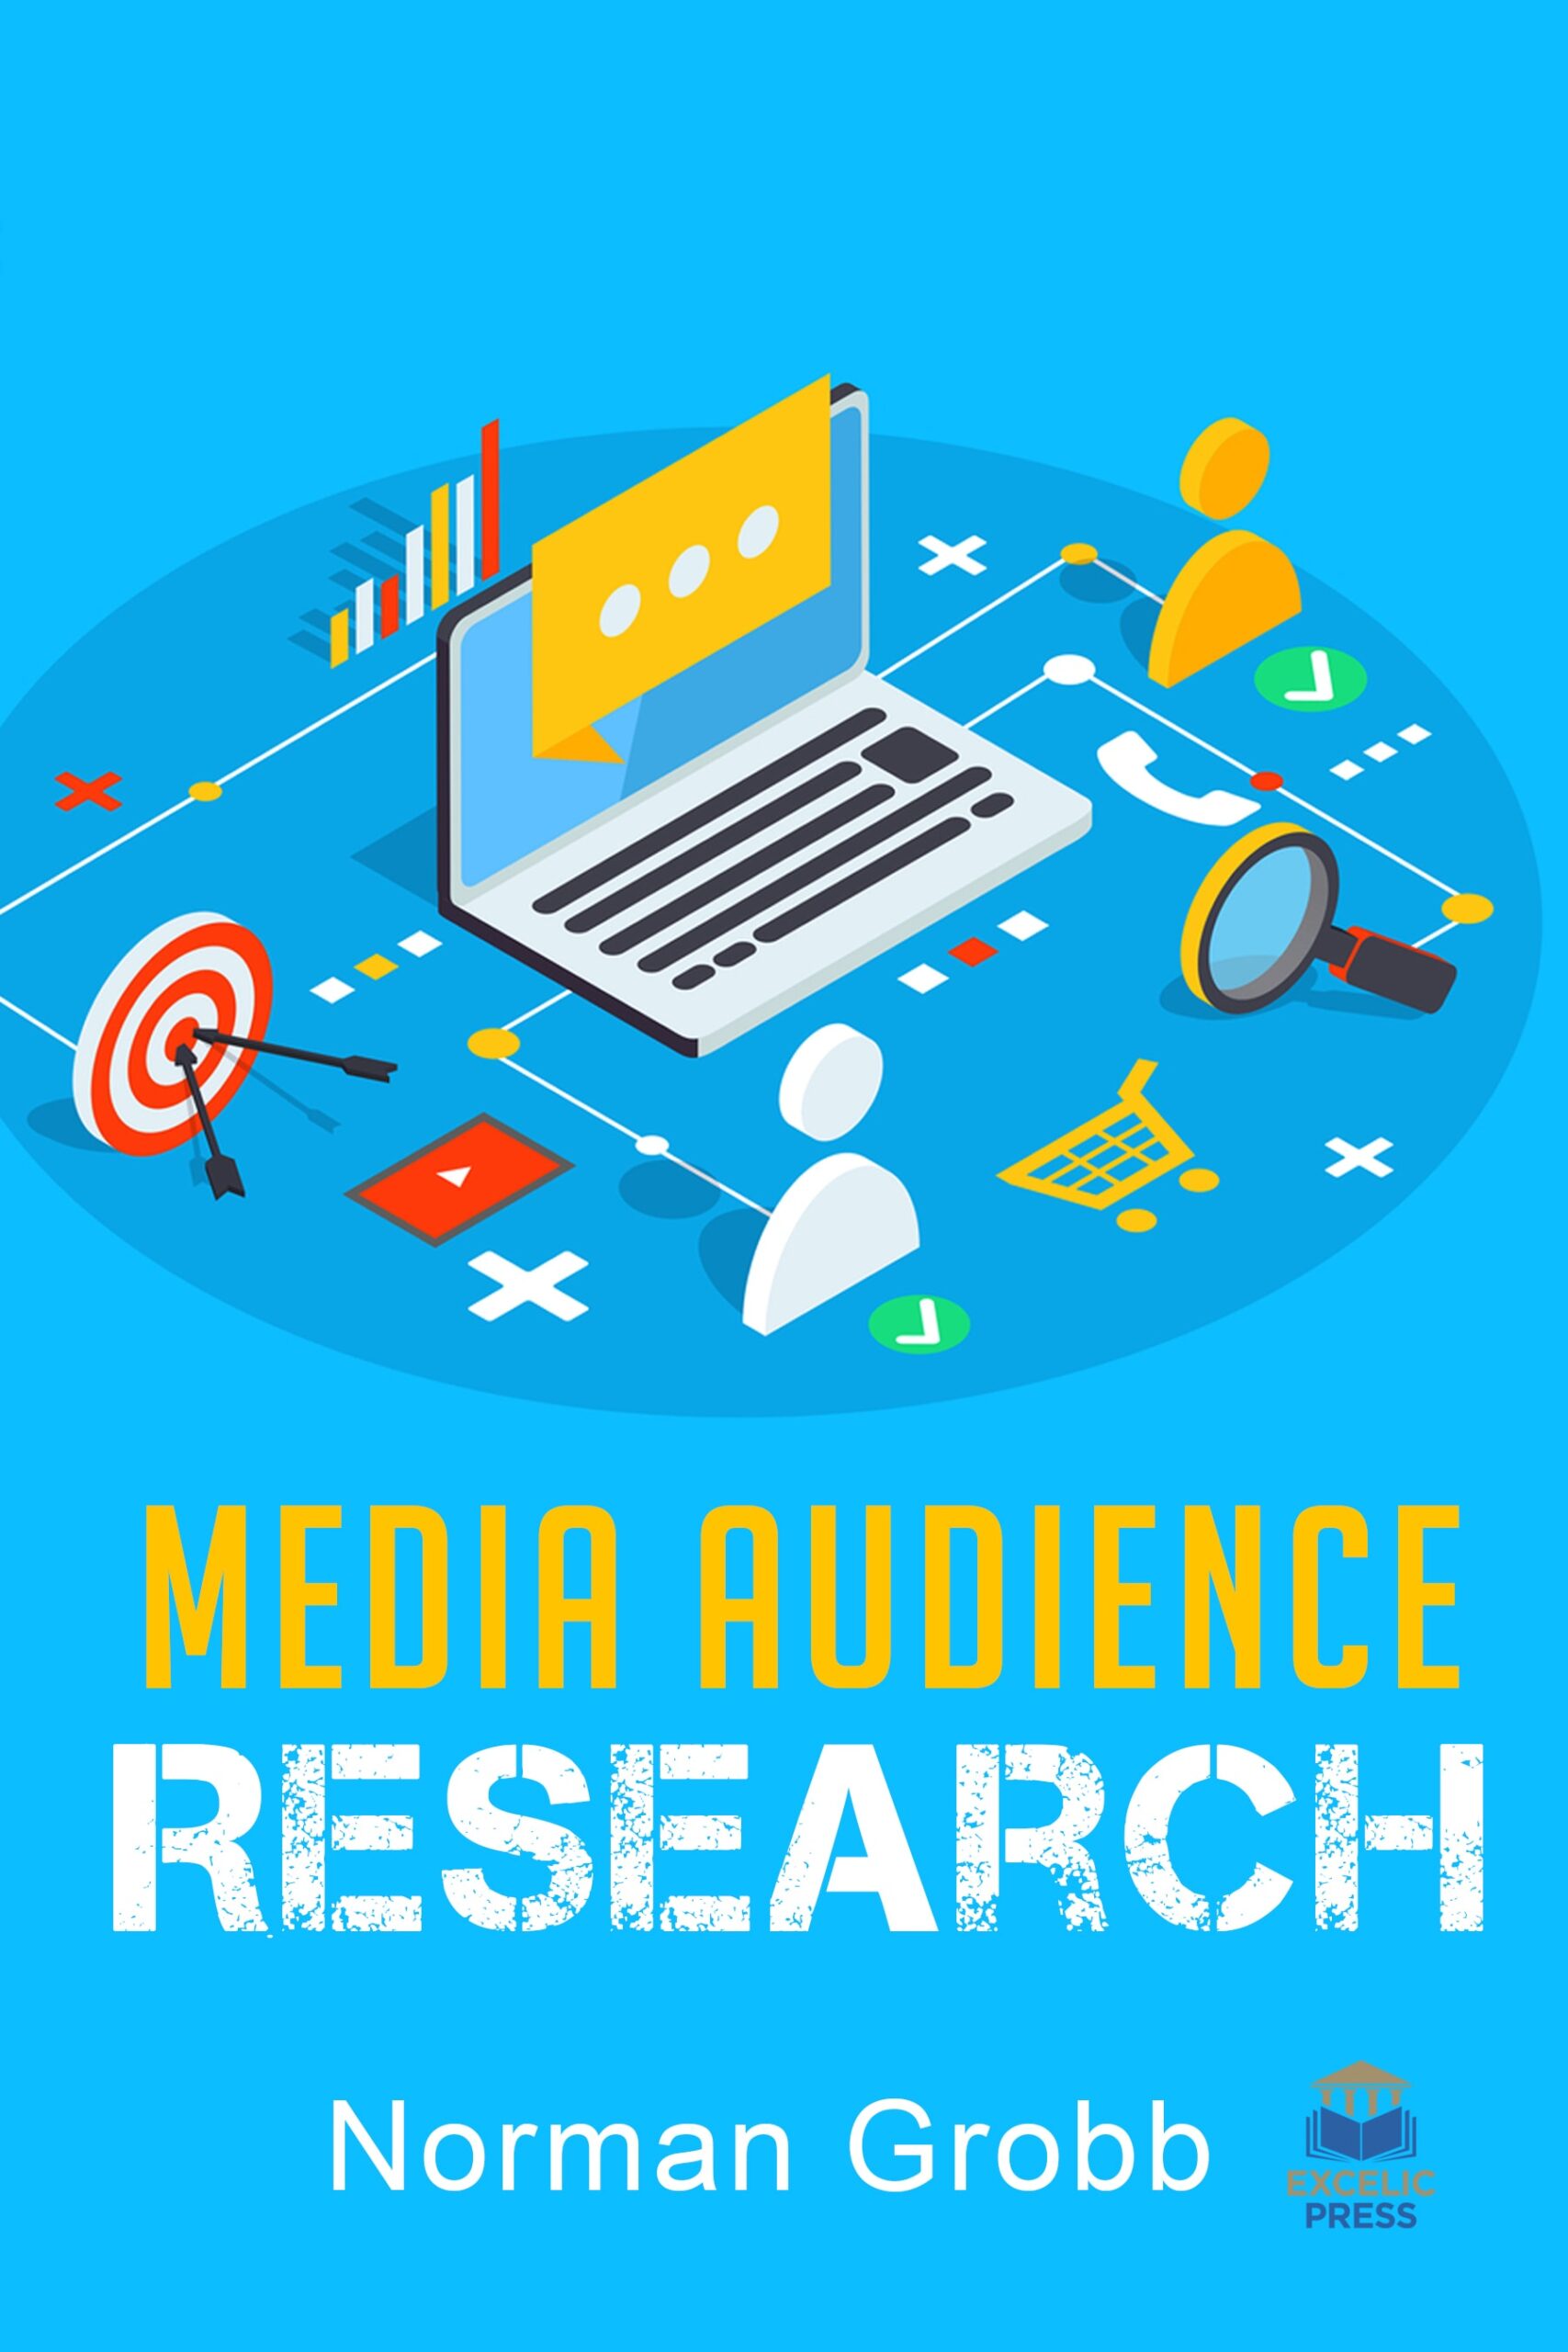 audience research media studies